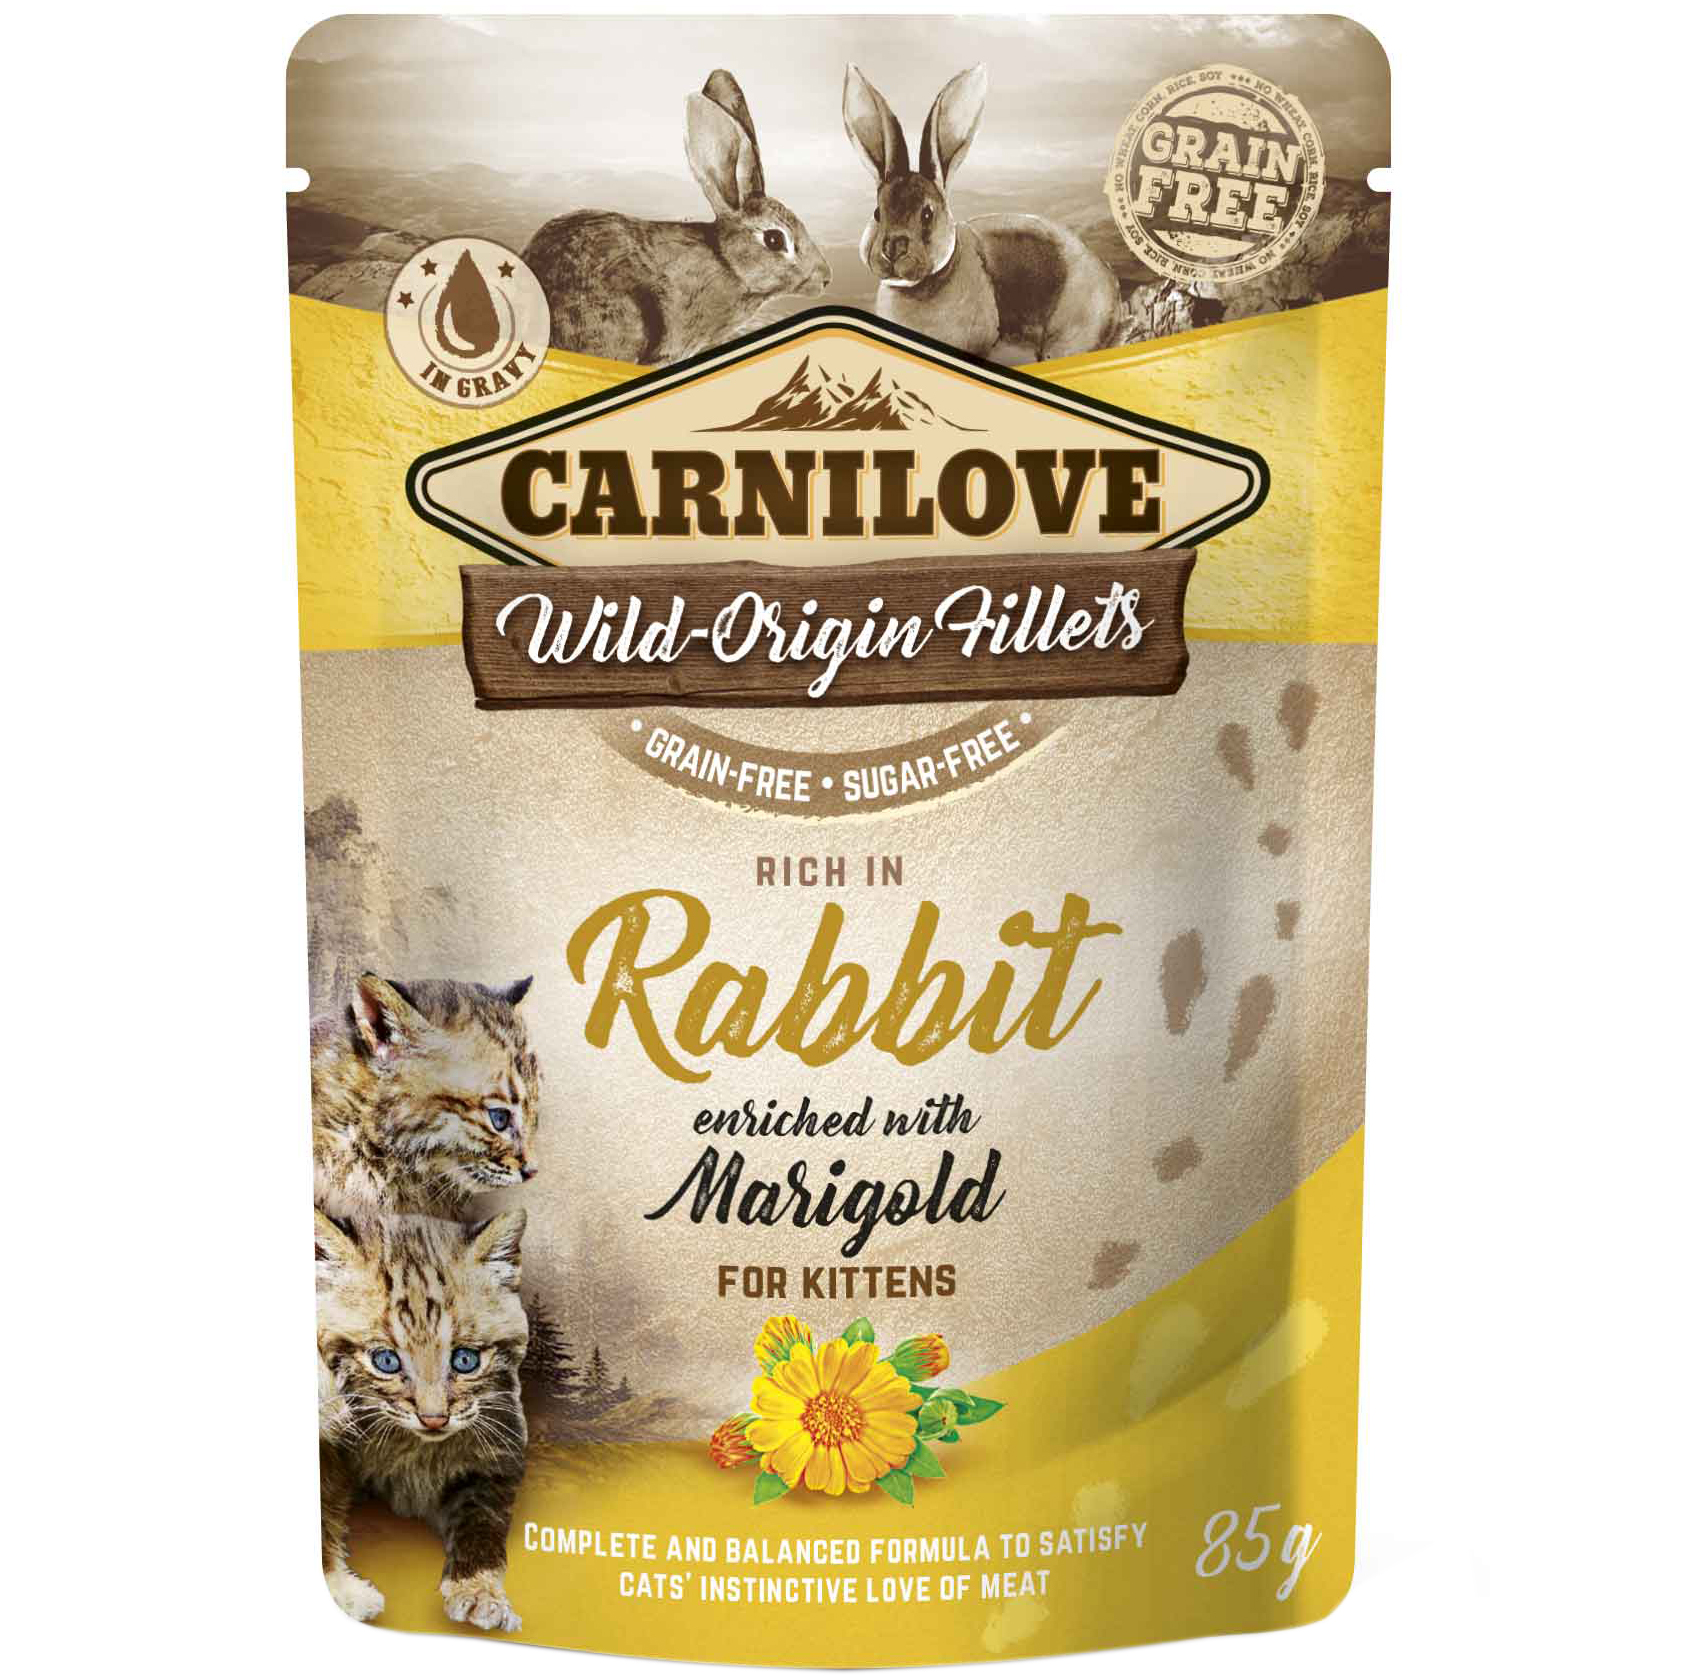 Влажный корм Carnilove rich in Rabbit enriched with Marigold в соусе для котят 85 г - фото 1